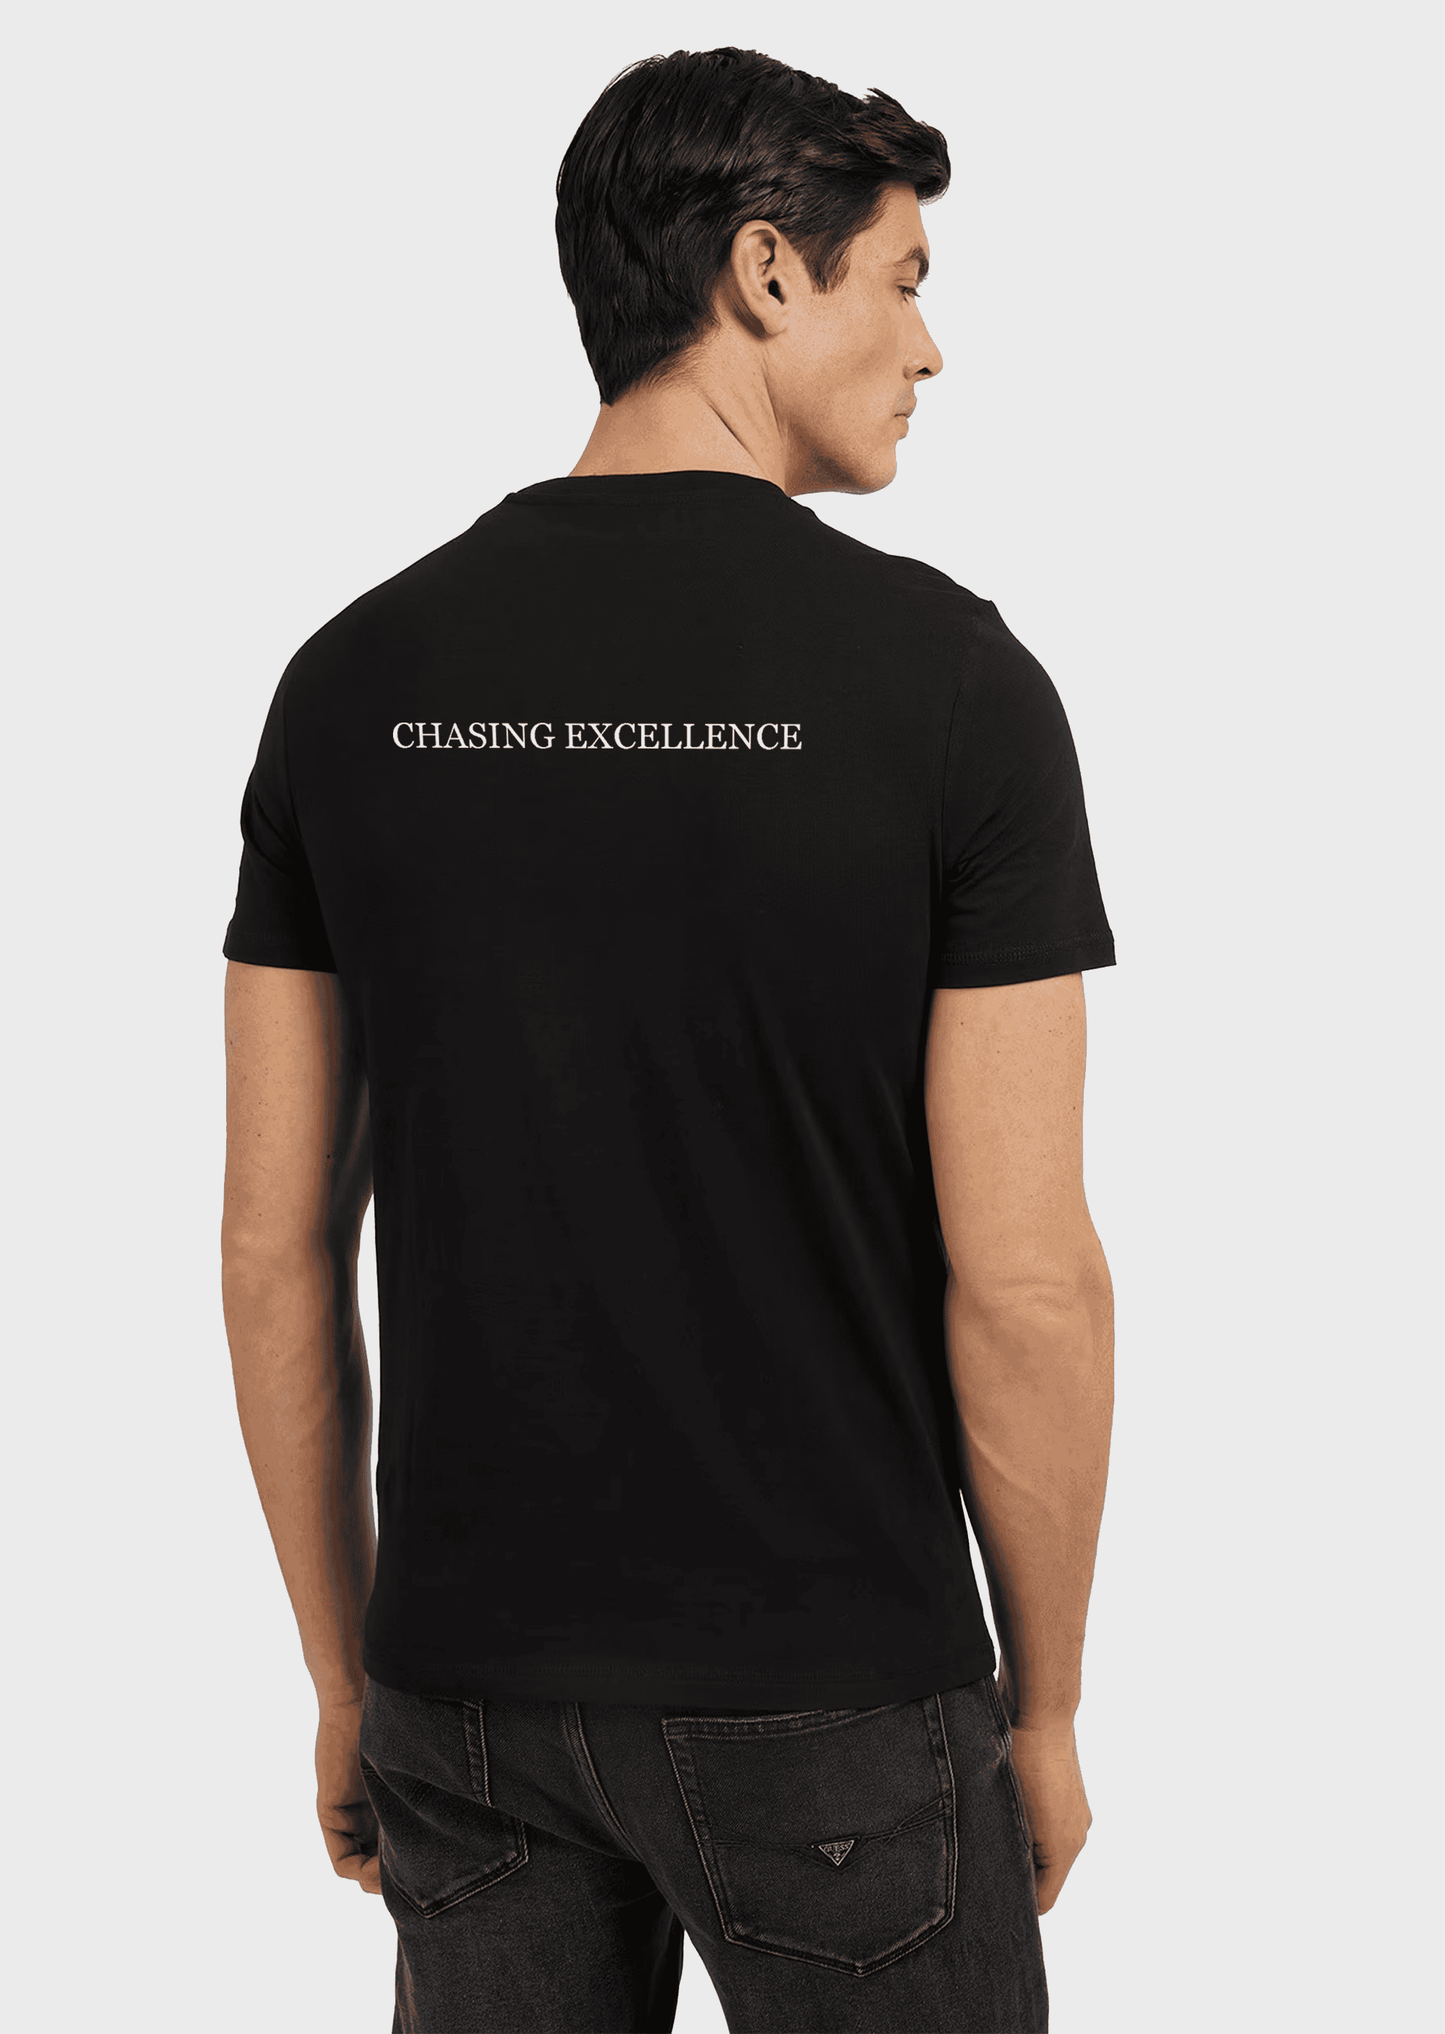 The Virtus – Store Apparel Virtus T-Shirt